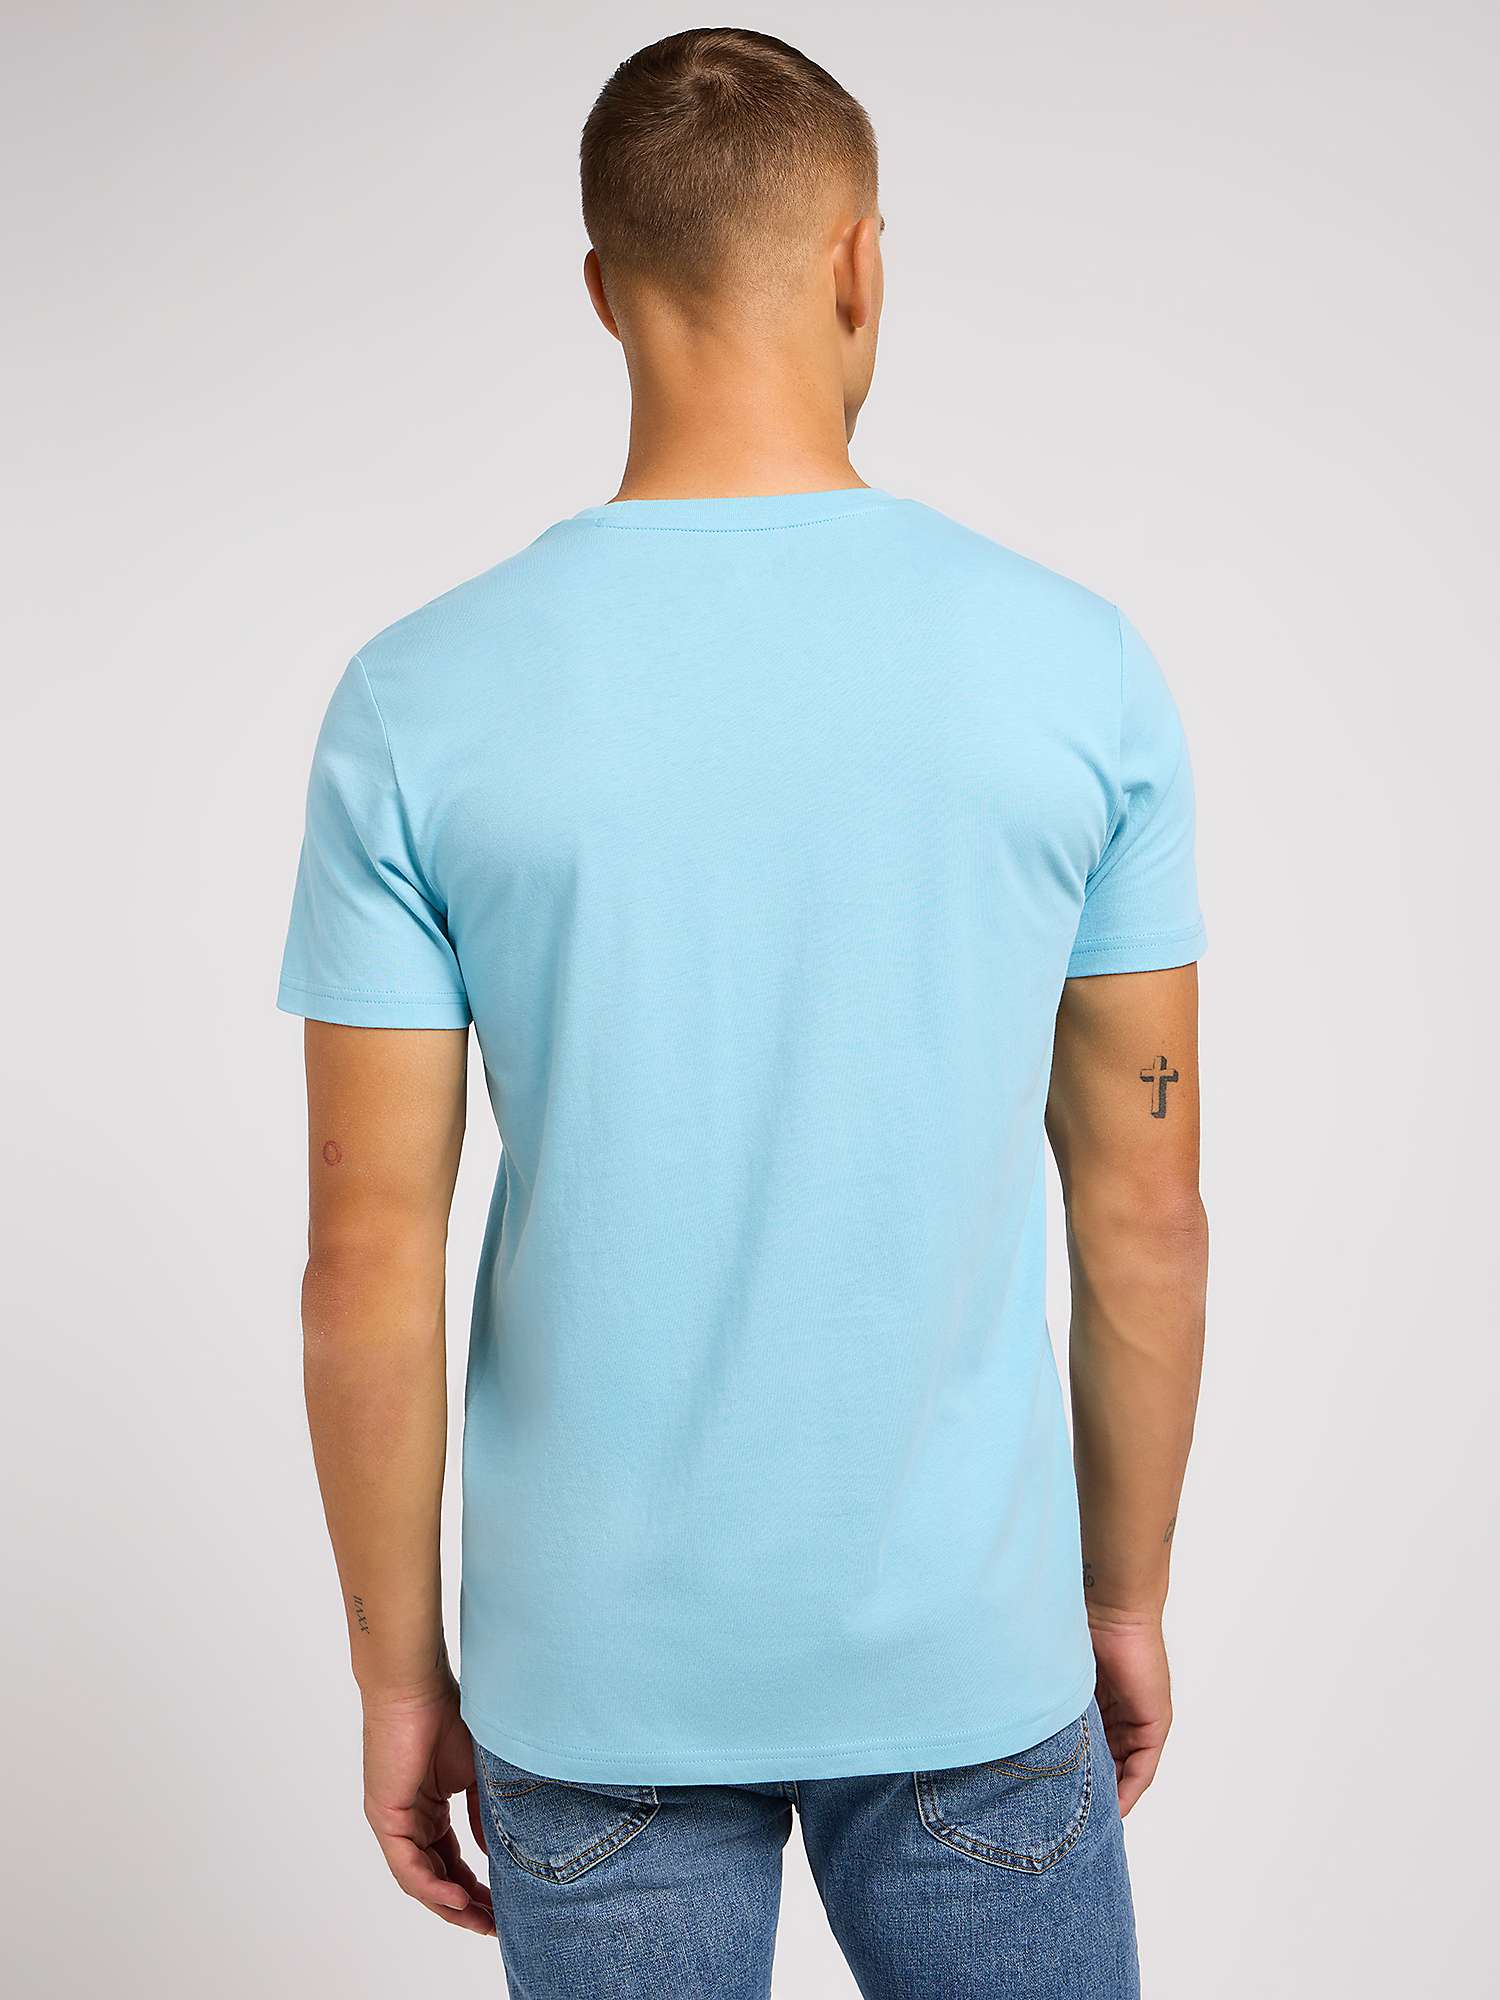 Buy Lee Short Sleeve Patch Logo T-Shirt, Blue Online at johnlewis.com